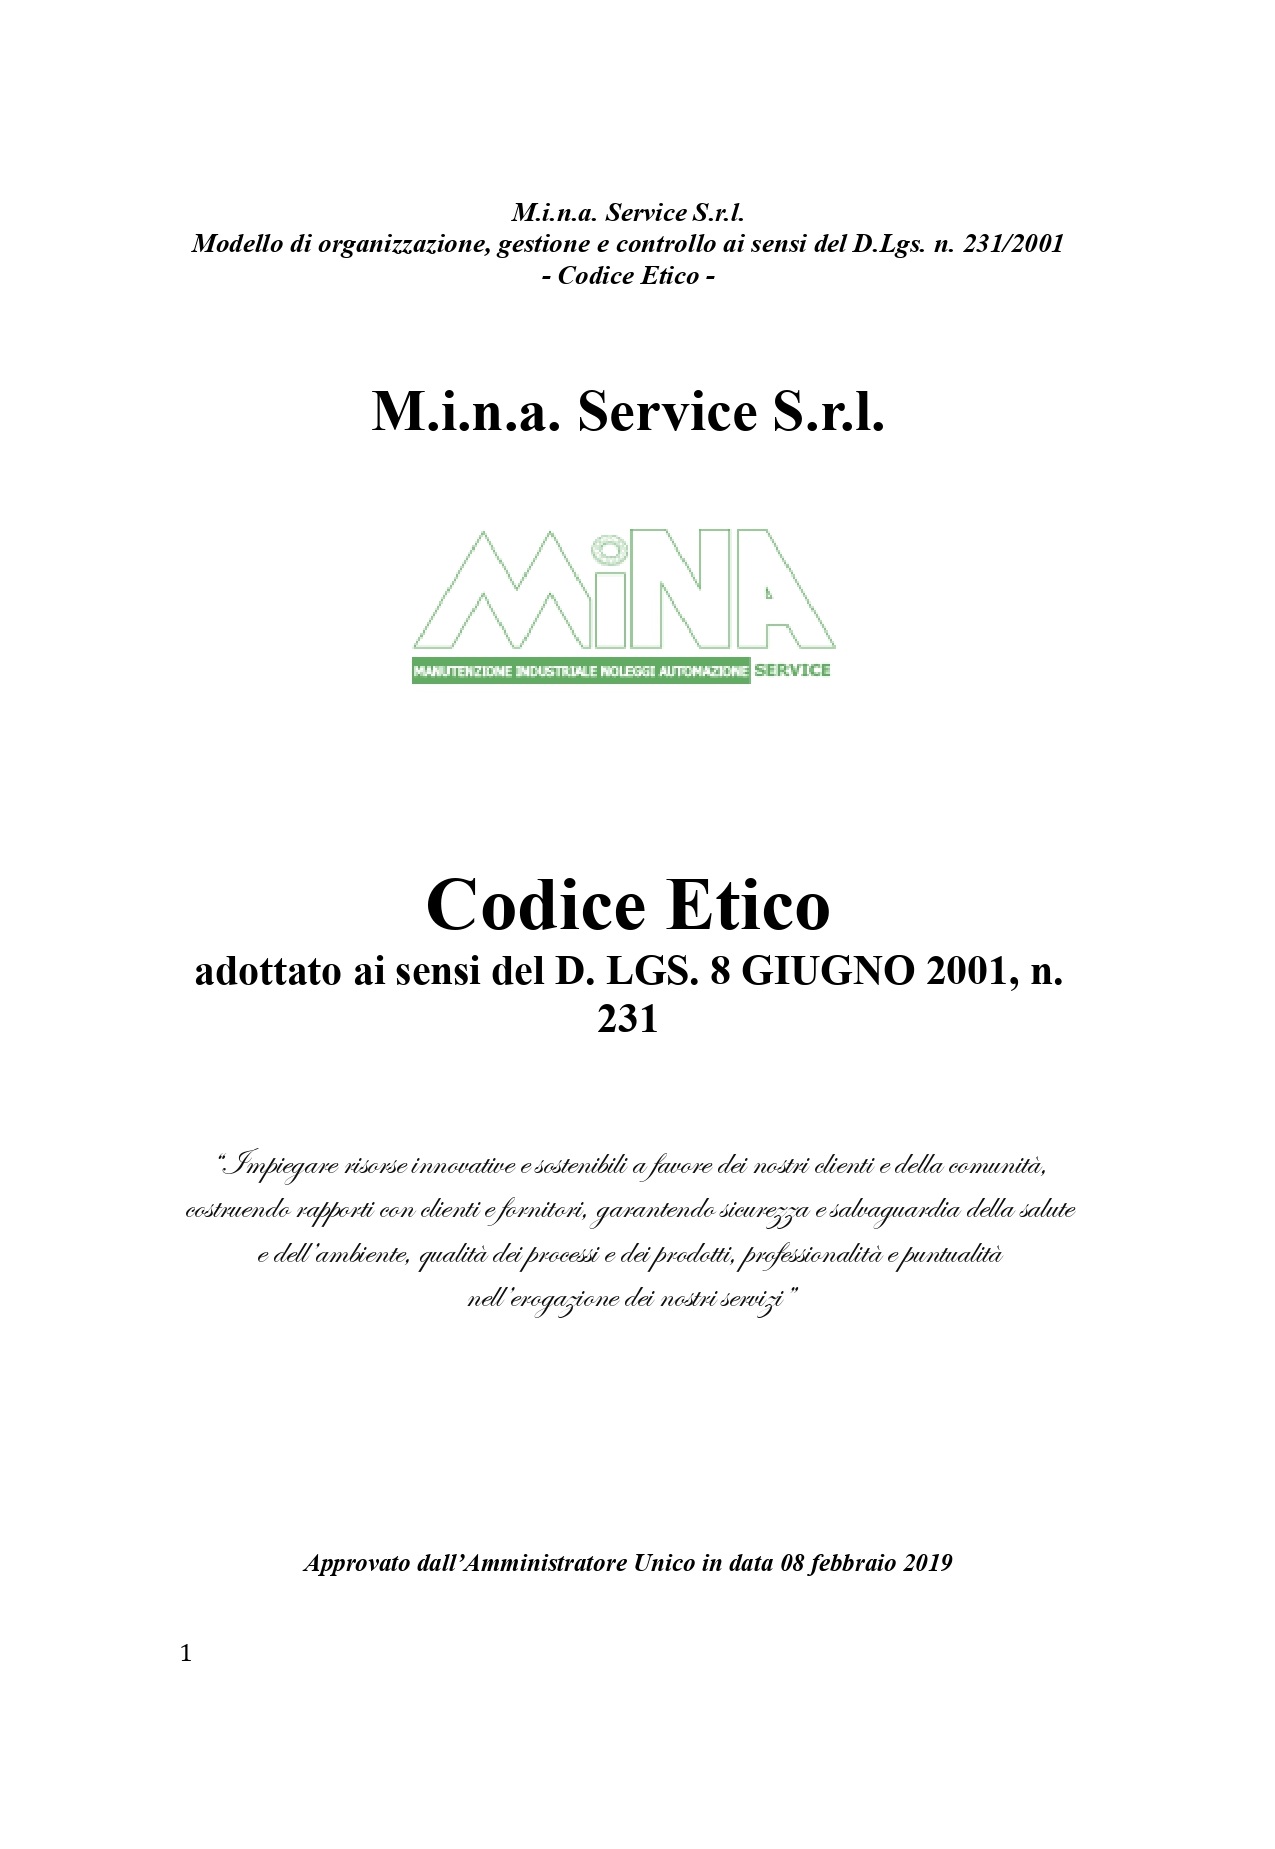 codice_etico_mina_service_srl_min_